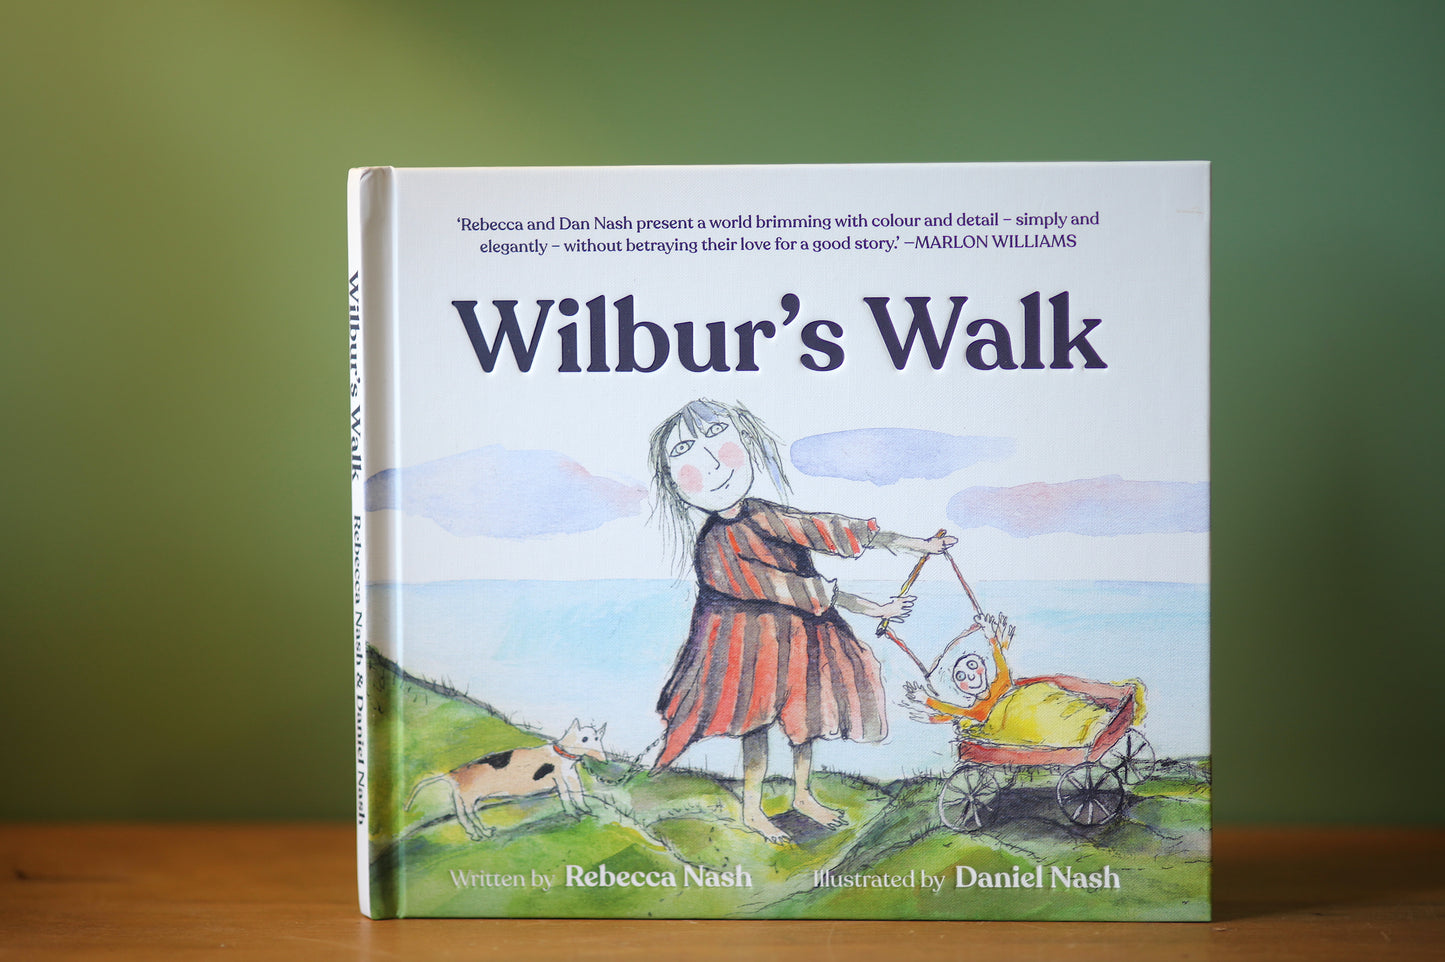 Wilbur’s Walk by Rebecca Nash